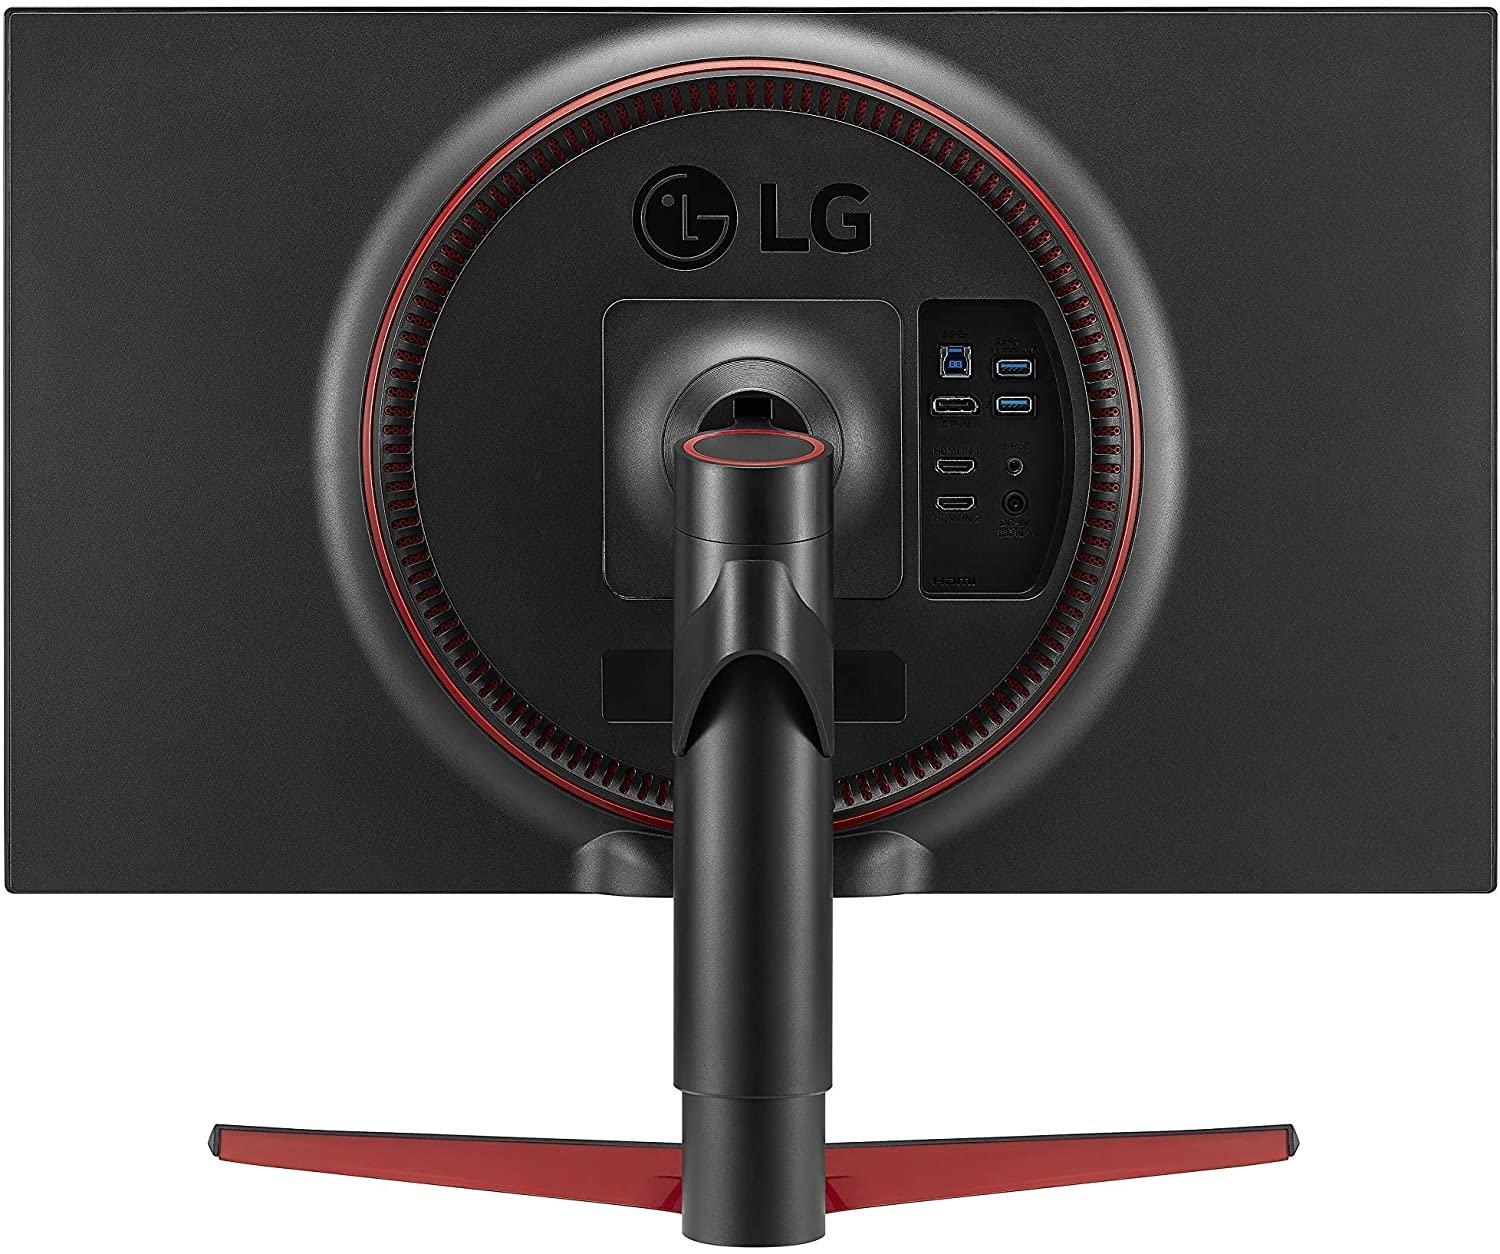 LG UltraGear™ 27” Gaming Monitor 